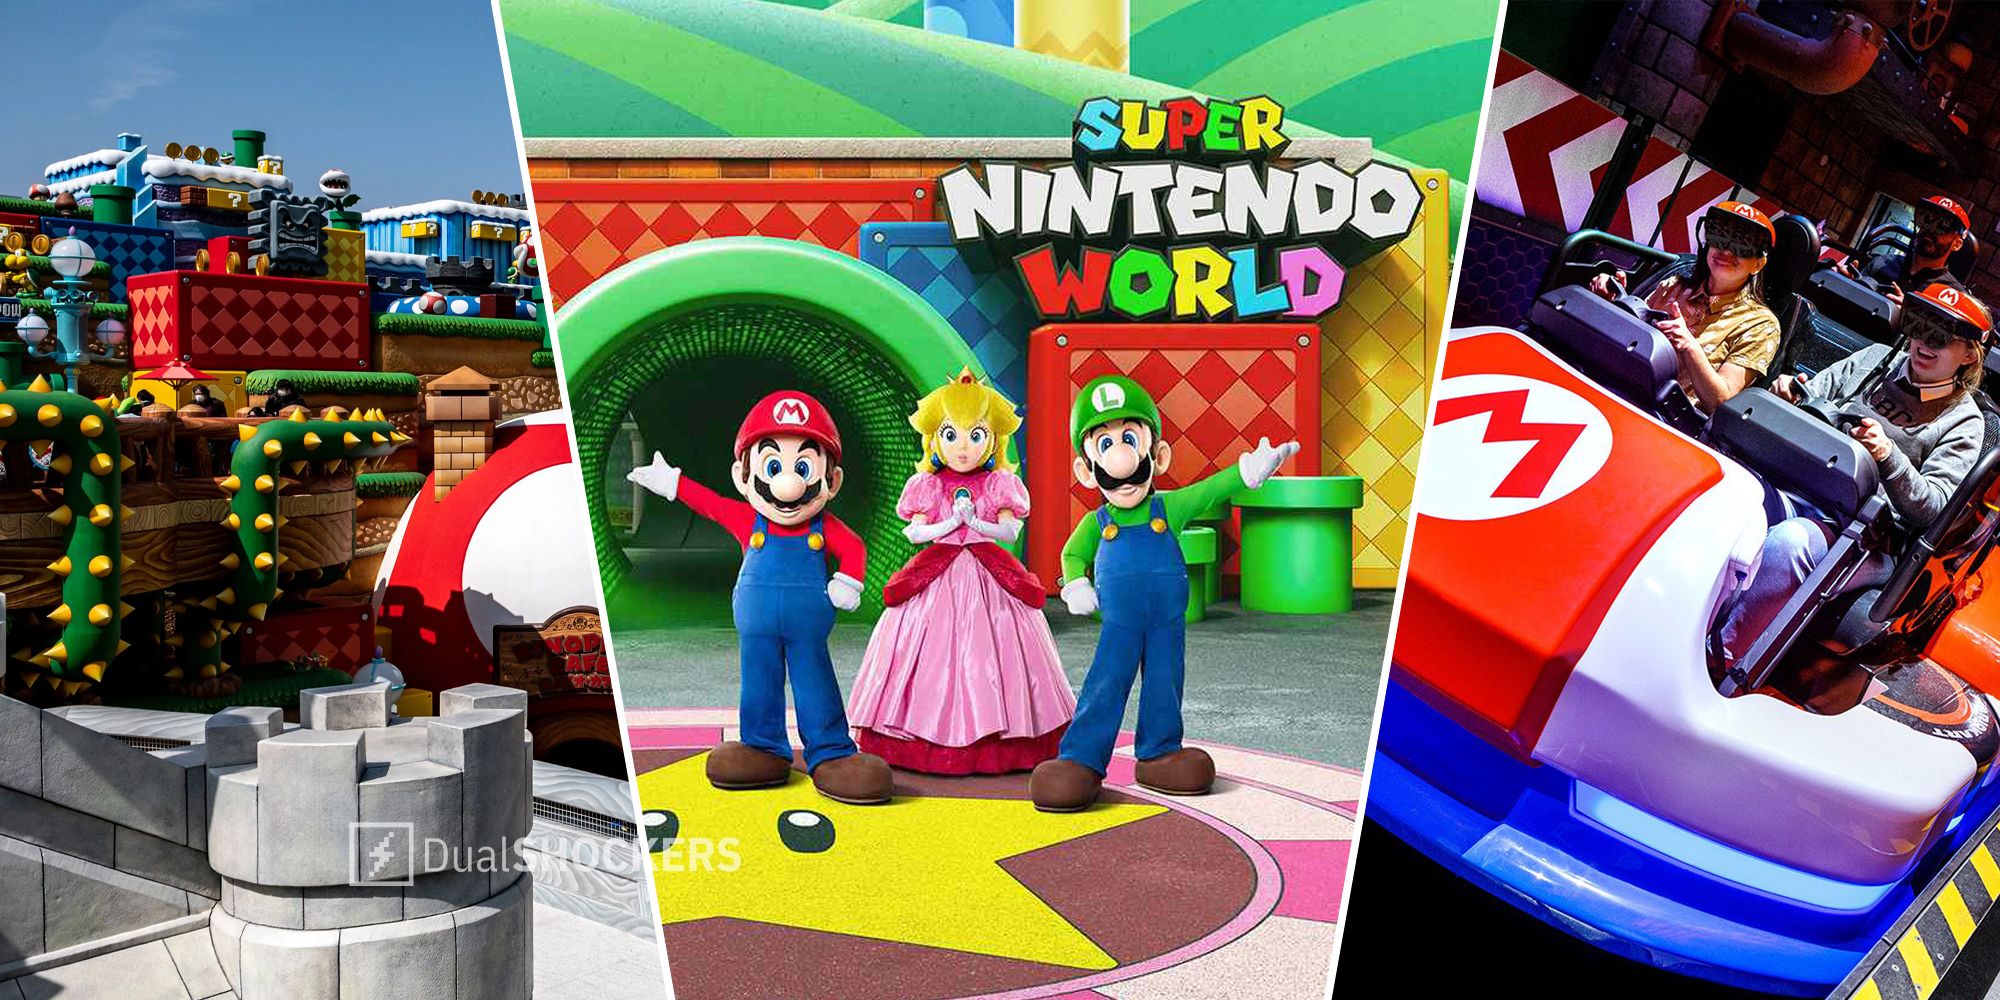 Super Nintendo World at Universal Studios Hollywood, Mario, Peach, Luigi, Mario Kart ride